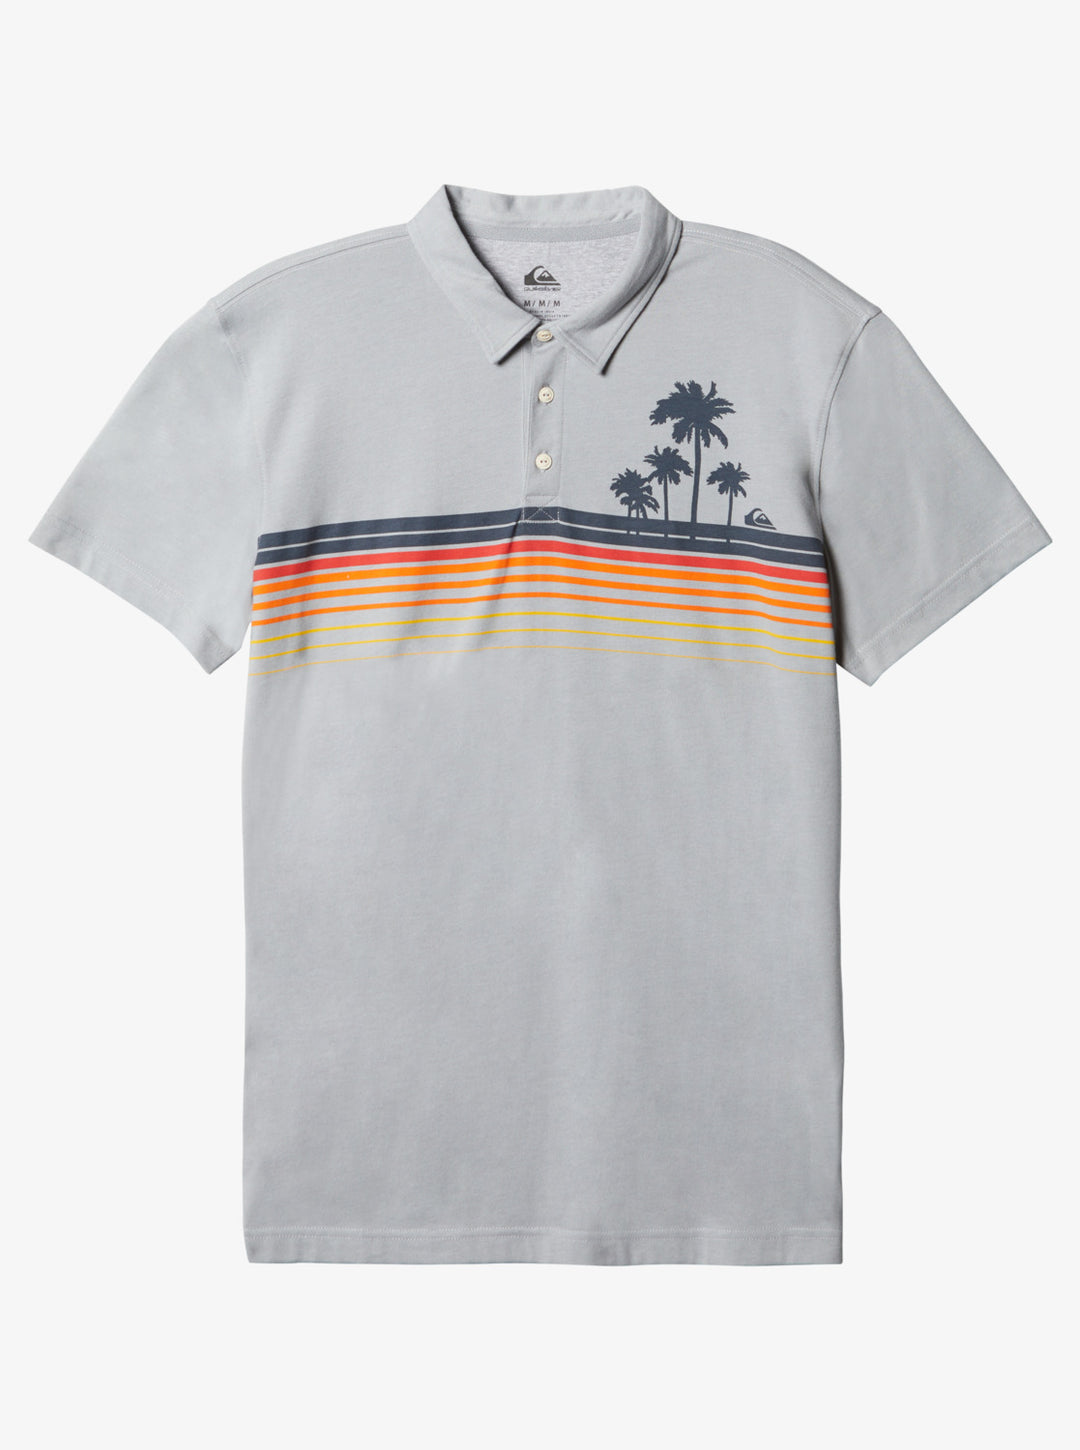 Quiksilver Short Sleeve Polo Shirt - Sleet - Sun Diego Boardshop